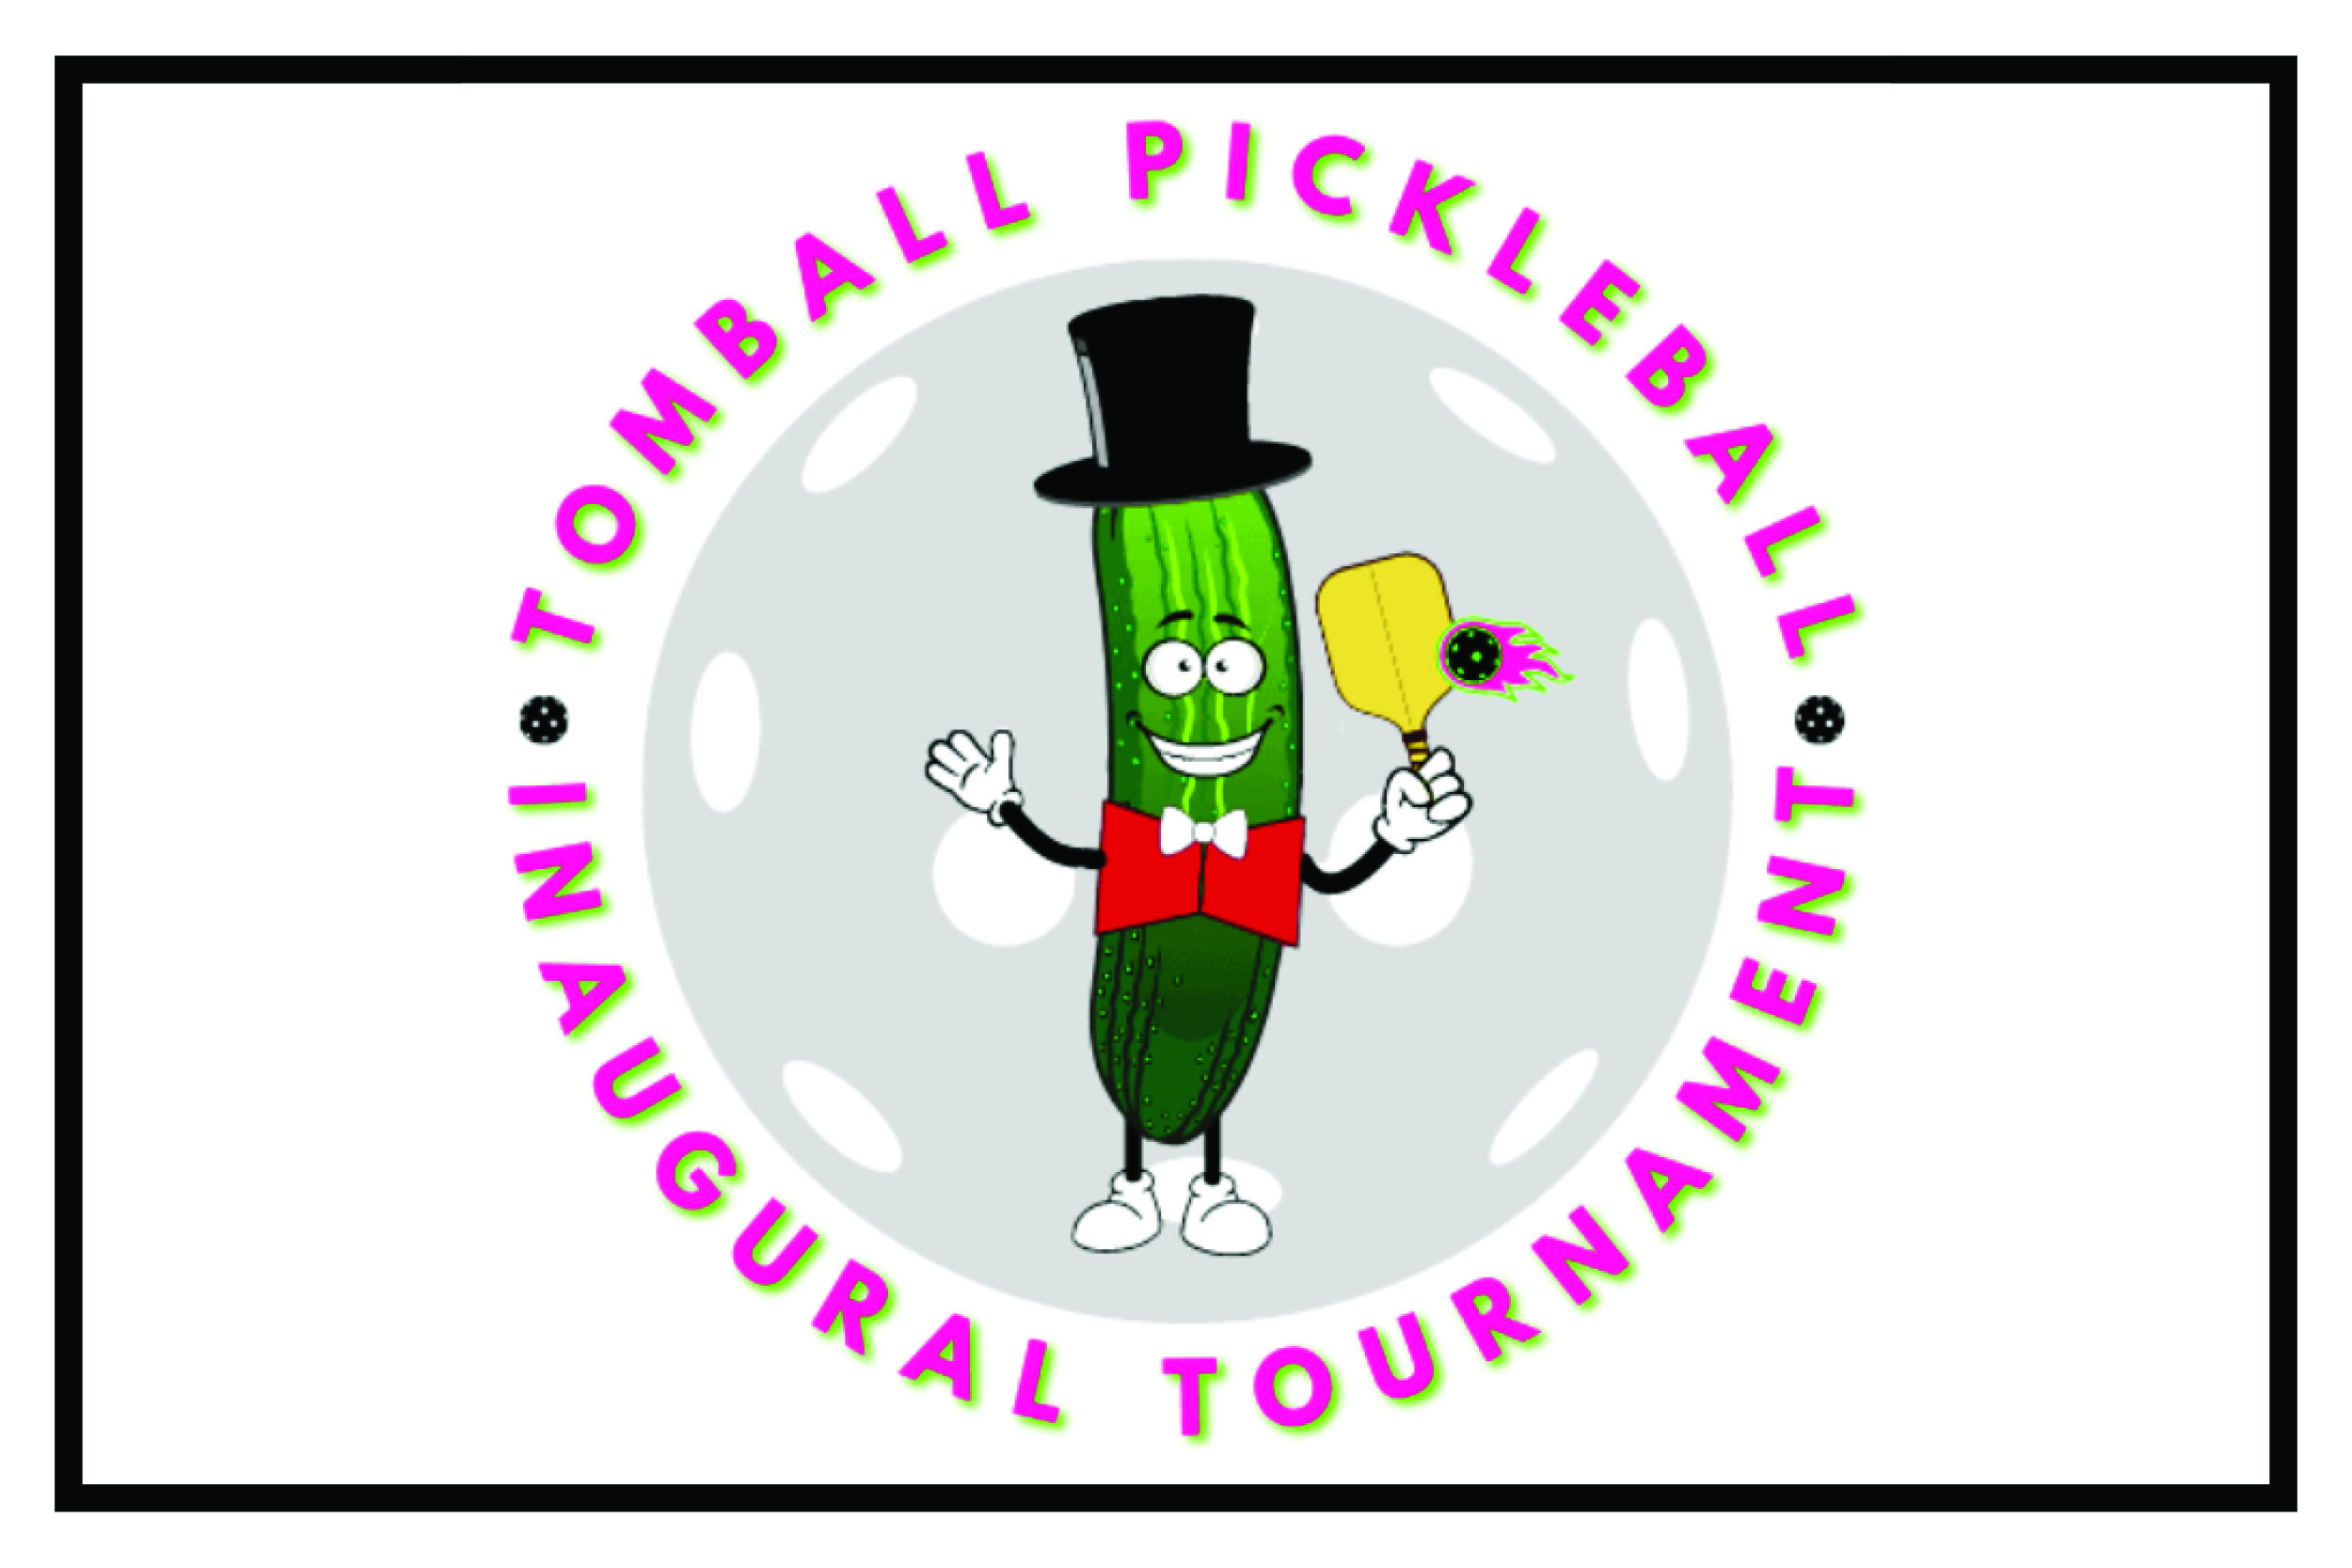 City of Tomball Pickleball Tournament - June 3rd